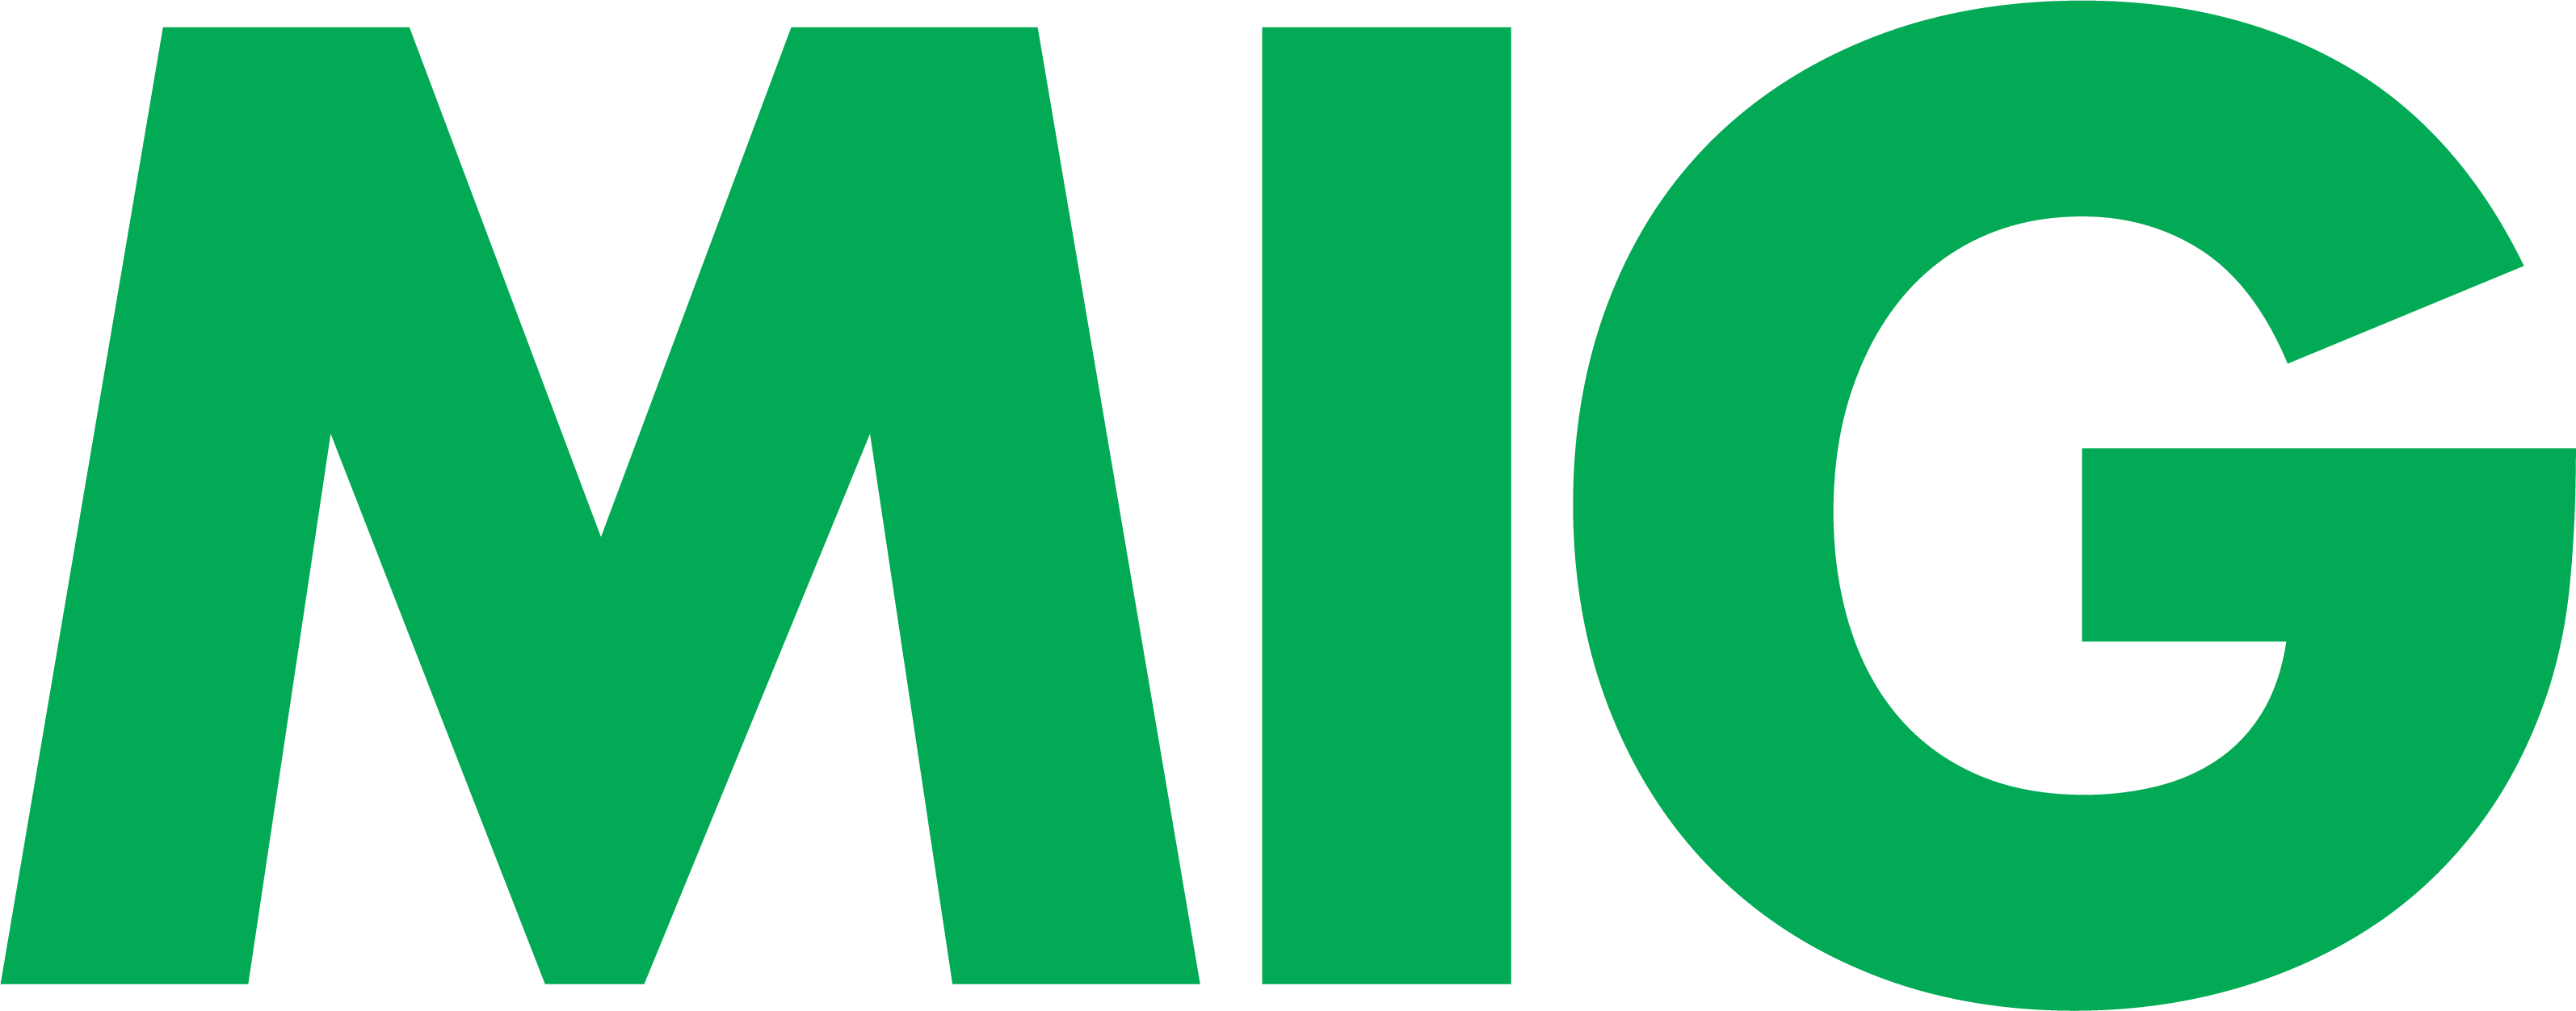 Mortgage Investors Group logo